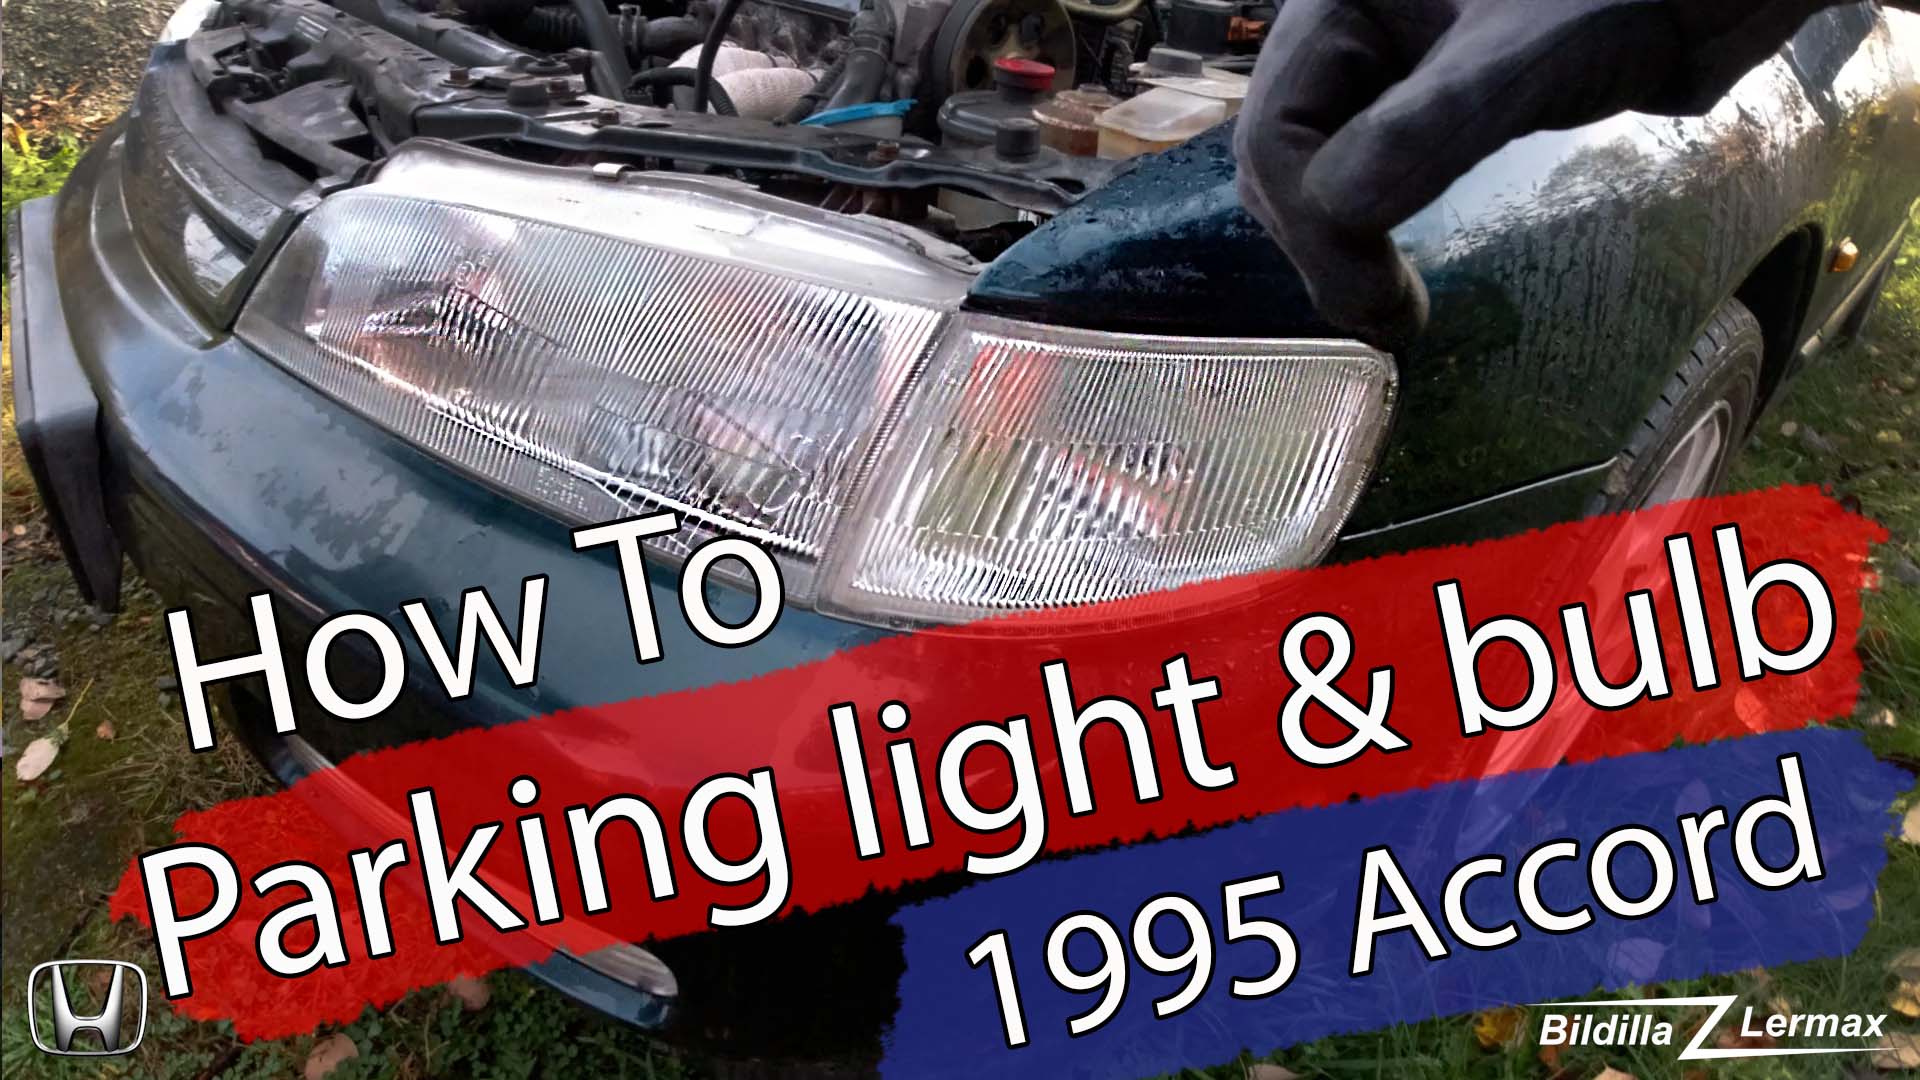 1995 Honda Accord Parking light bulb replacement